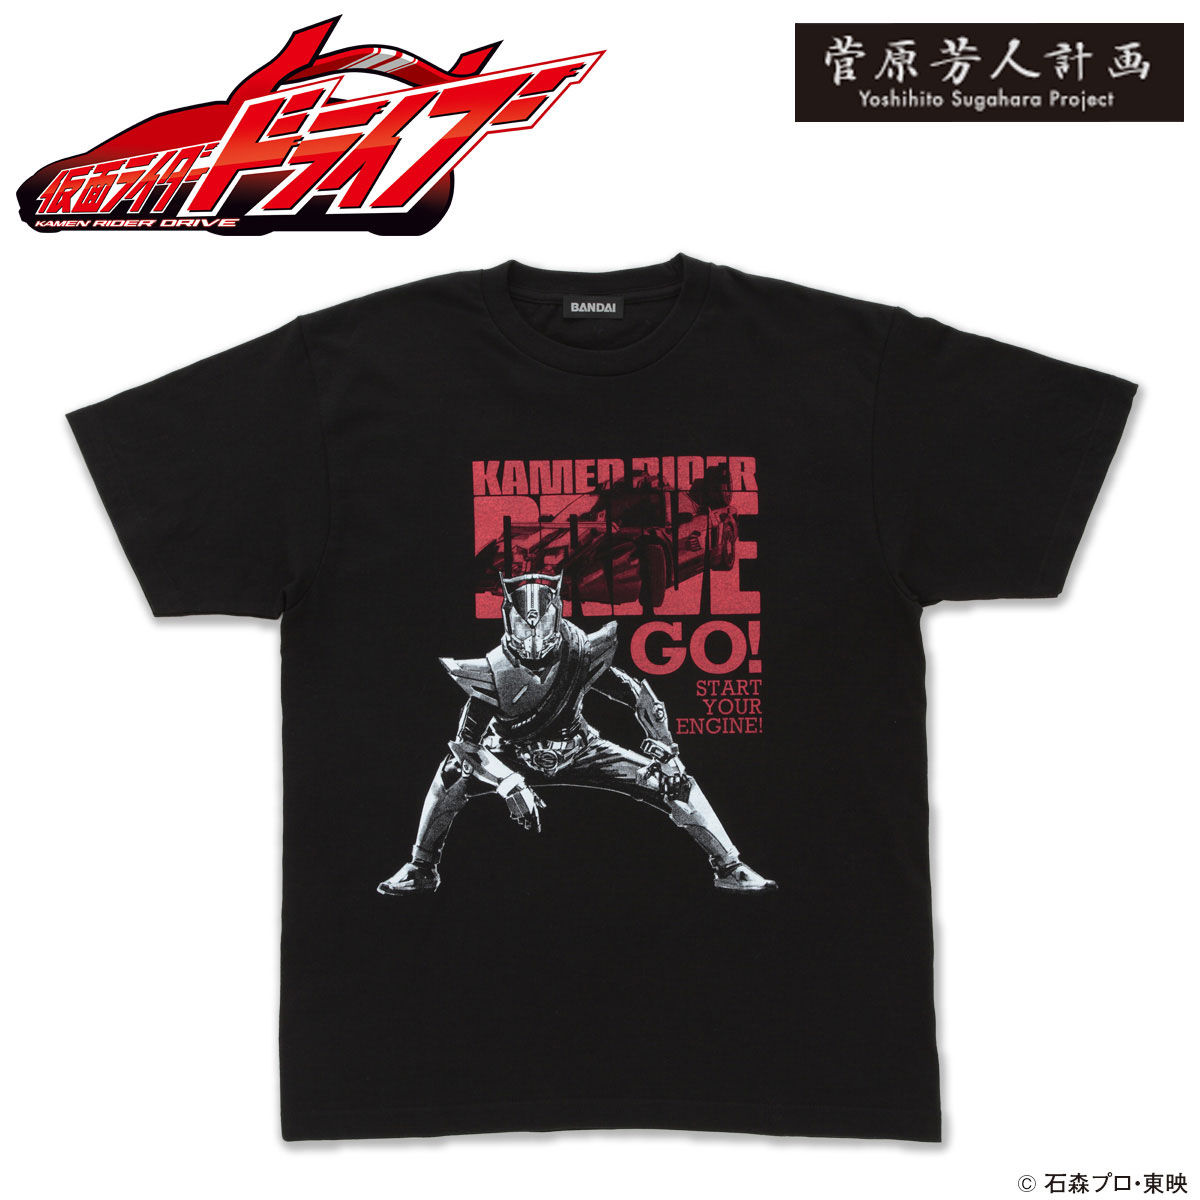 Yoshihito Sugahara Project Kamen Rider Drive And Tridoron T-Shirt